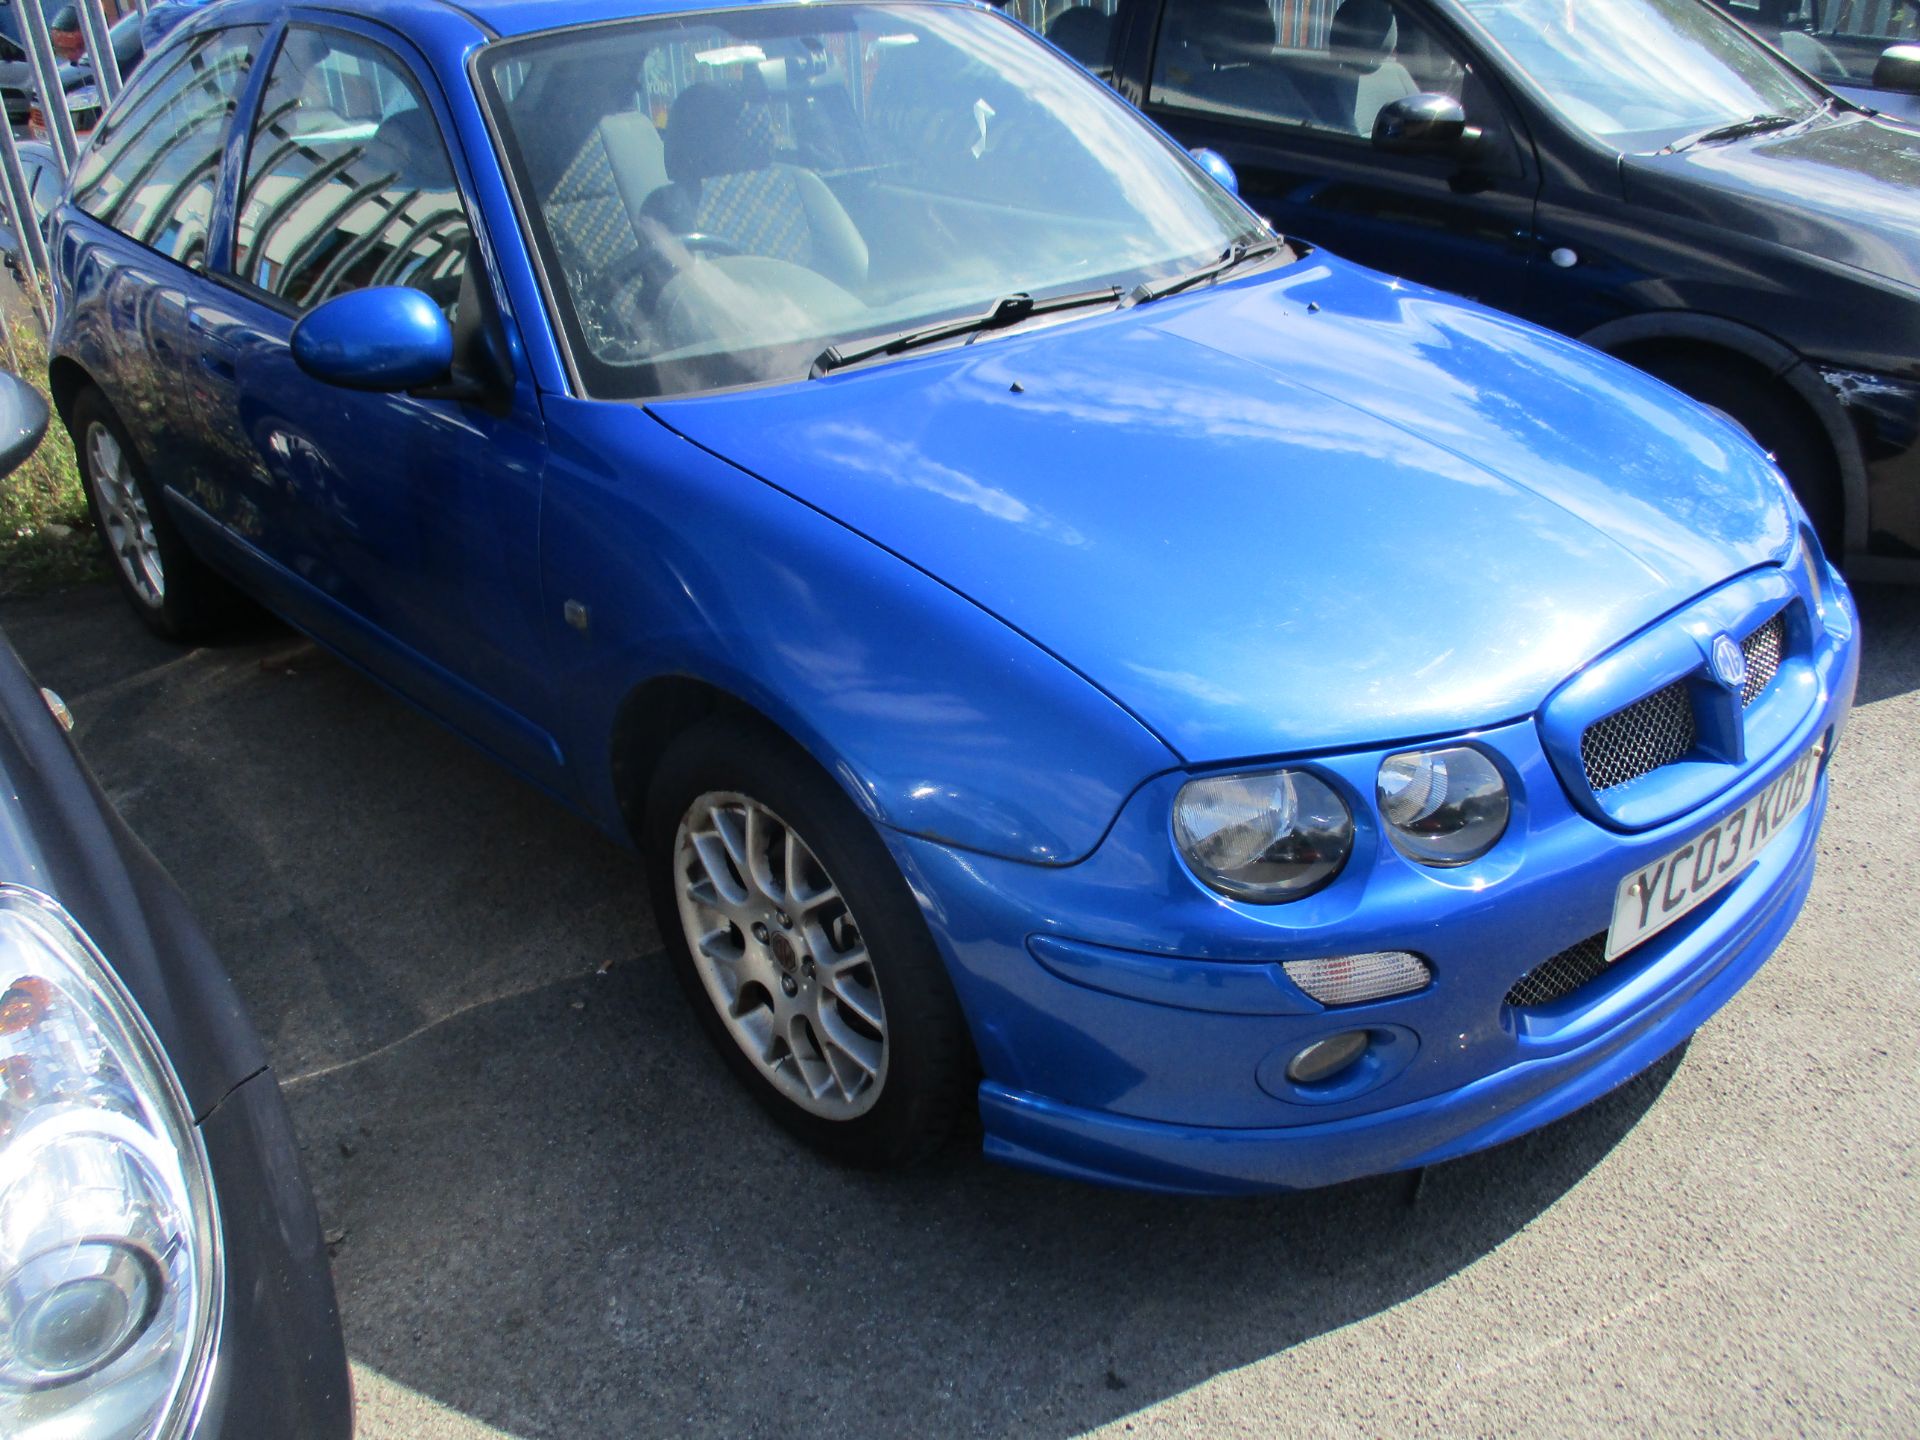 MG ZR+ 1.4L 3 DOOR HATCHBACK - petrol - blue Reg No YC03 KOB Rec Mil 69,392+as at 7.5. - Image 2 of 2